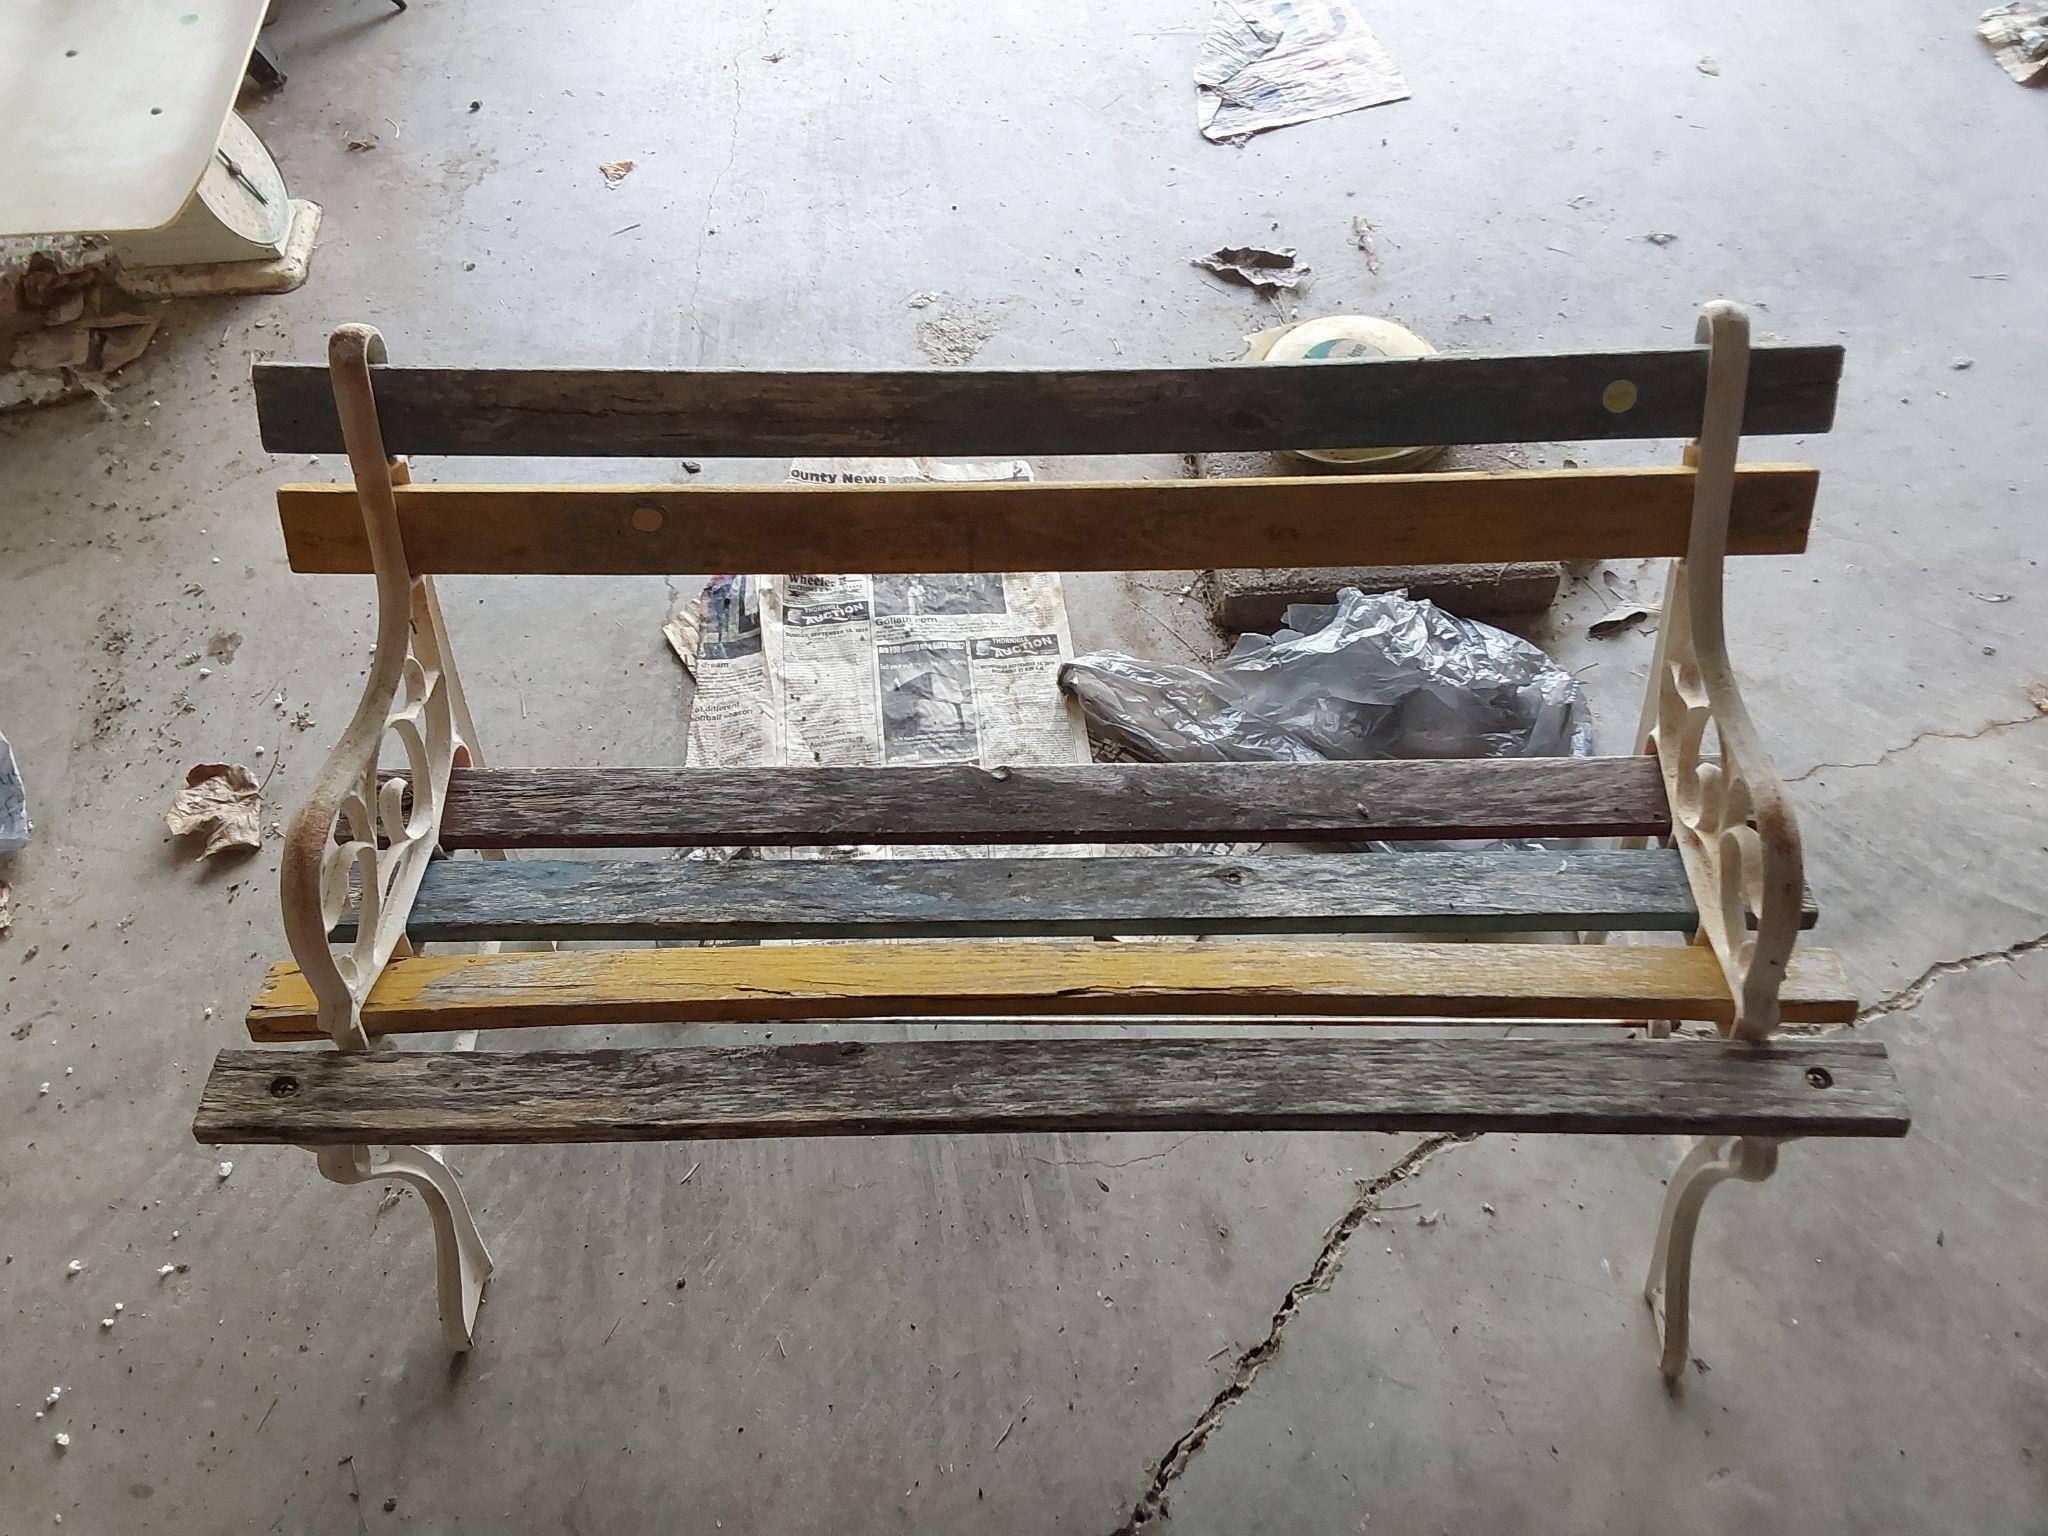 Cast iron bench for children